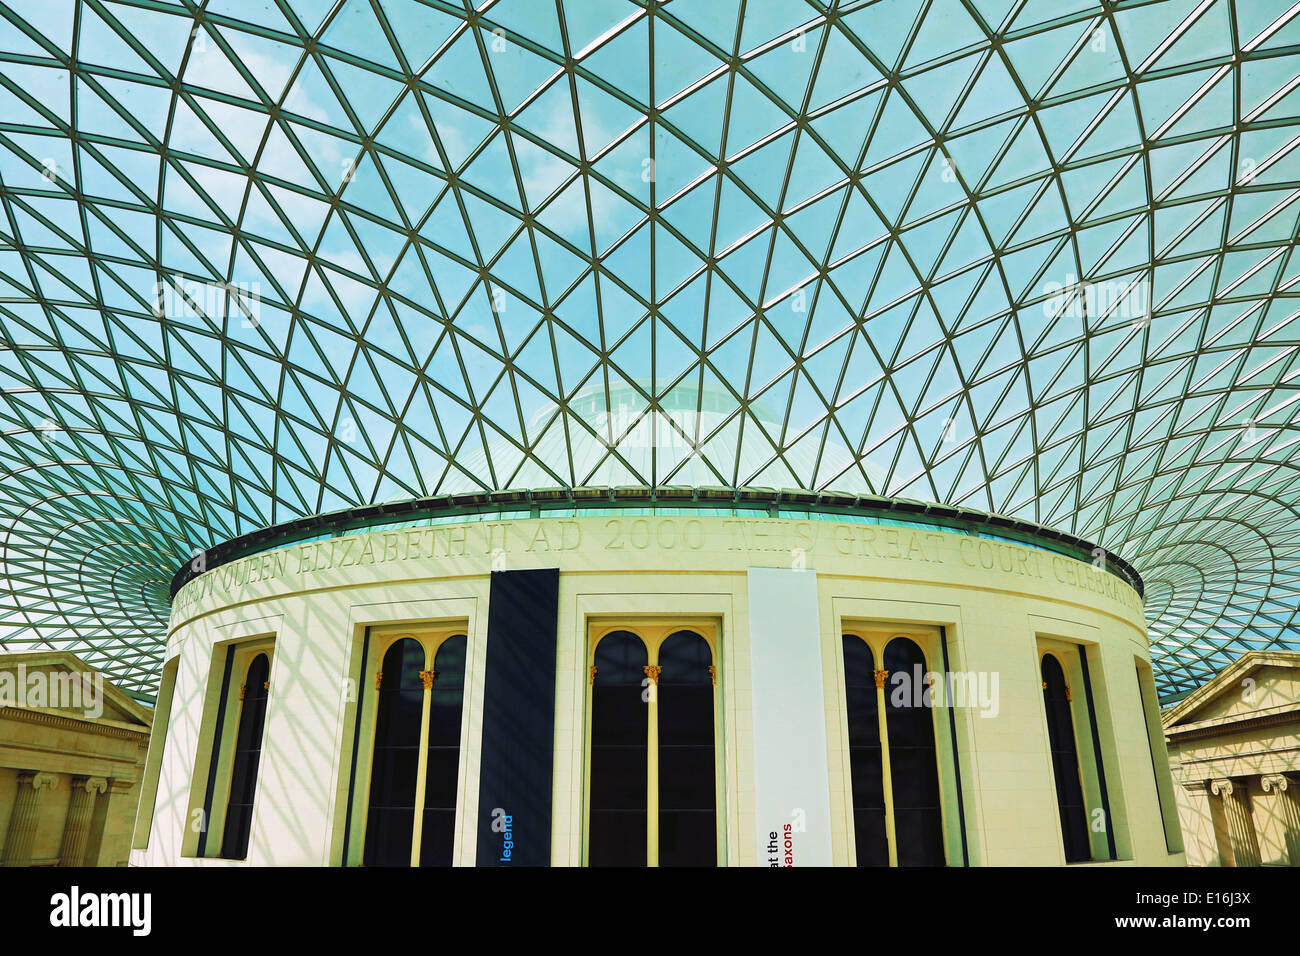 La Great Court al British Museum di Londra, Inghilterra Foto Stock